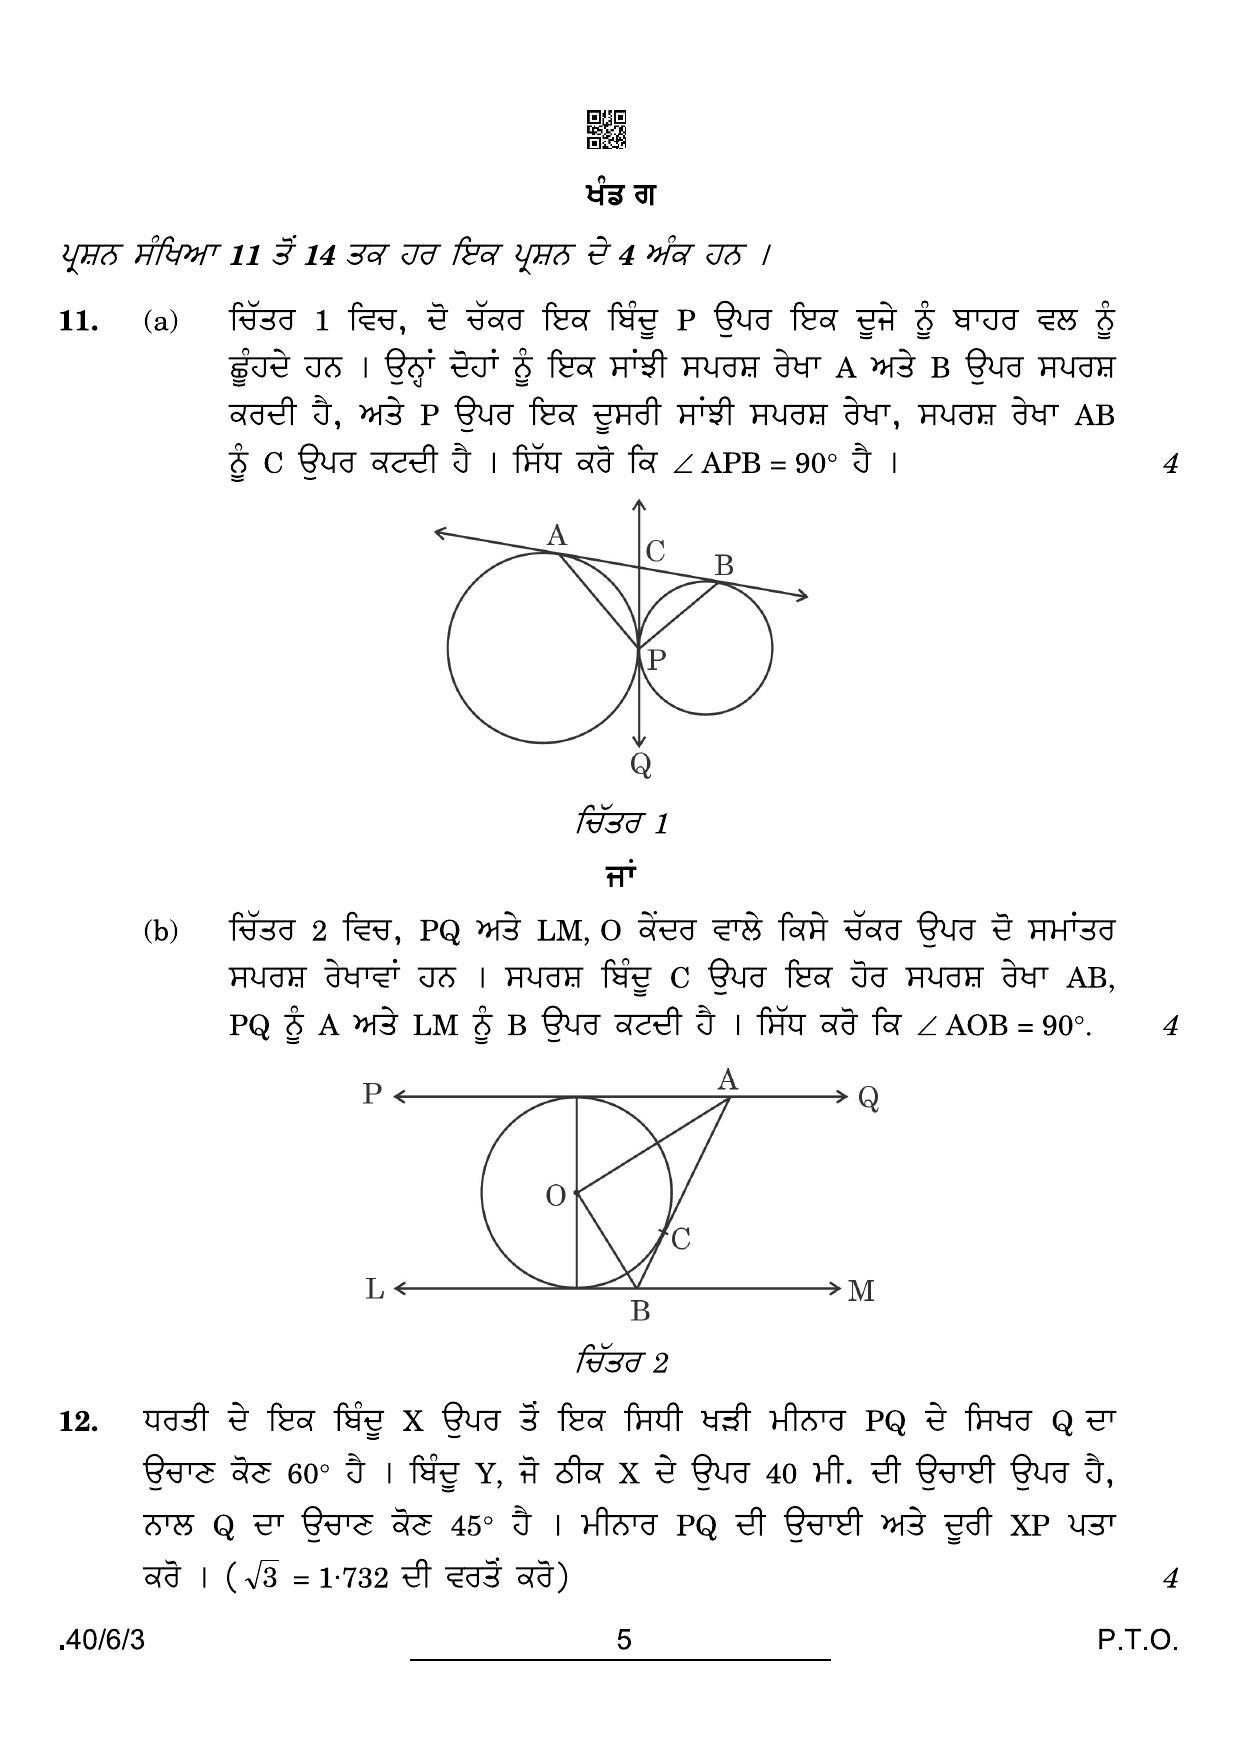 CBSE Class 10 40-6-3 Maths Std Punjabi 2022 Compartment Question Paper - Page 5